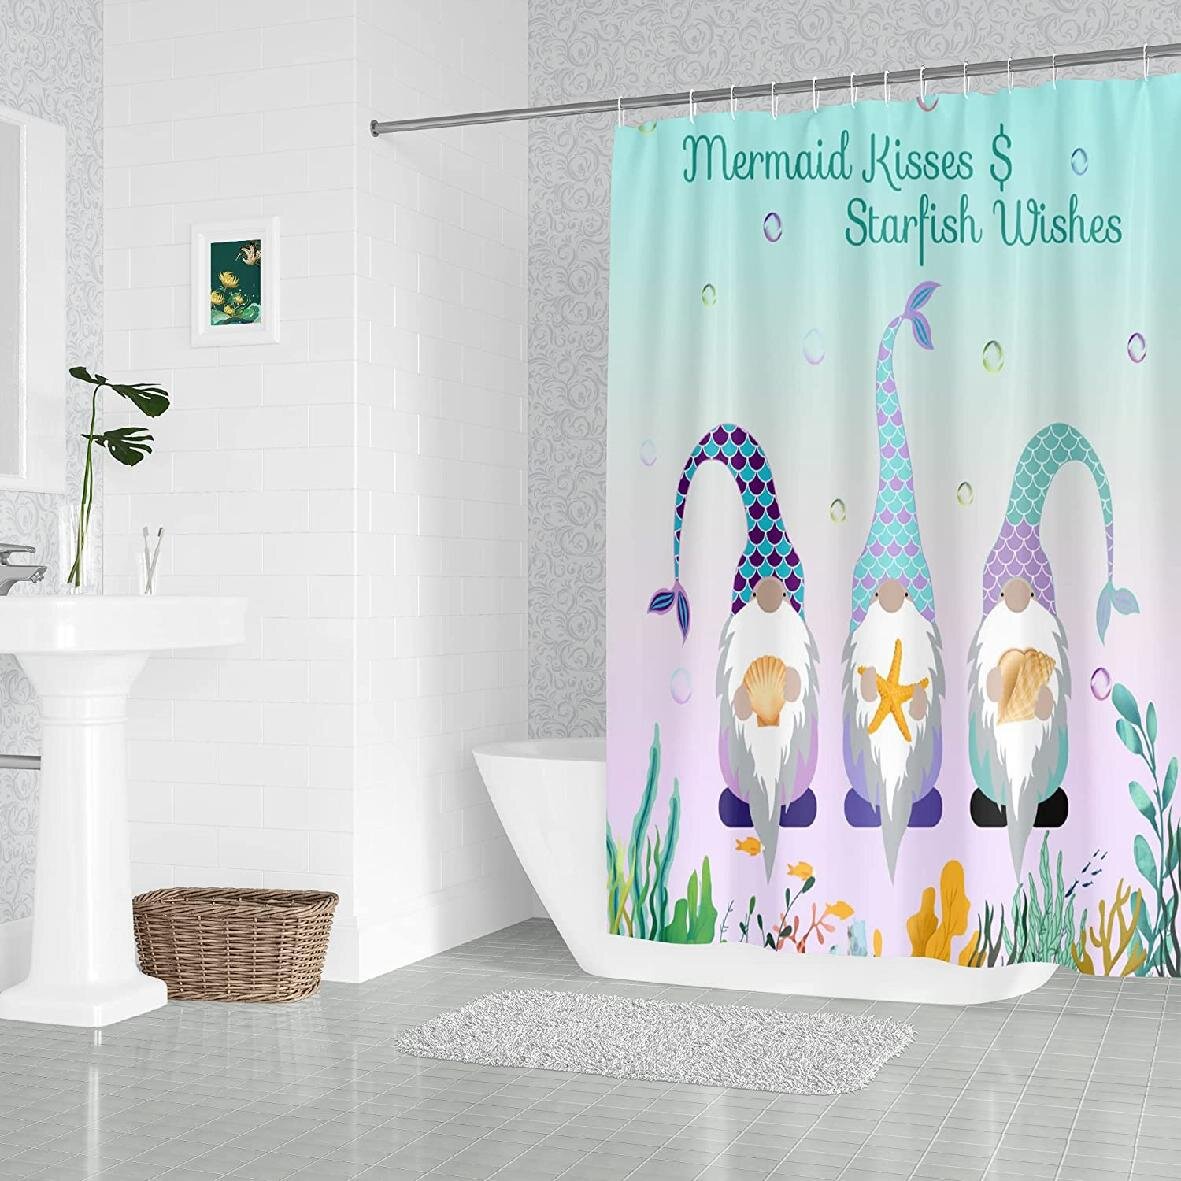 Mermaid Kisses & Starfish Wishes Shower Curtain Set For Bathroom Decor w/ Hooks 